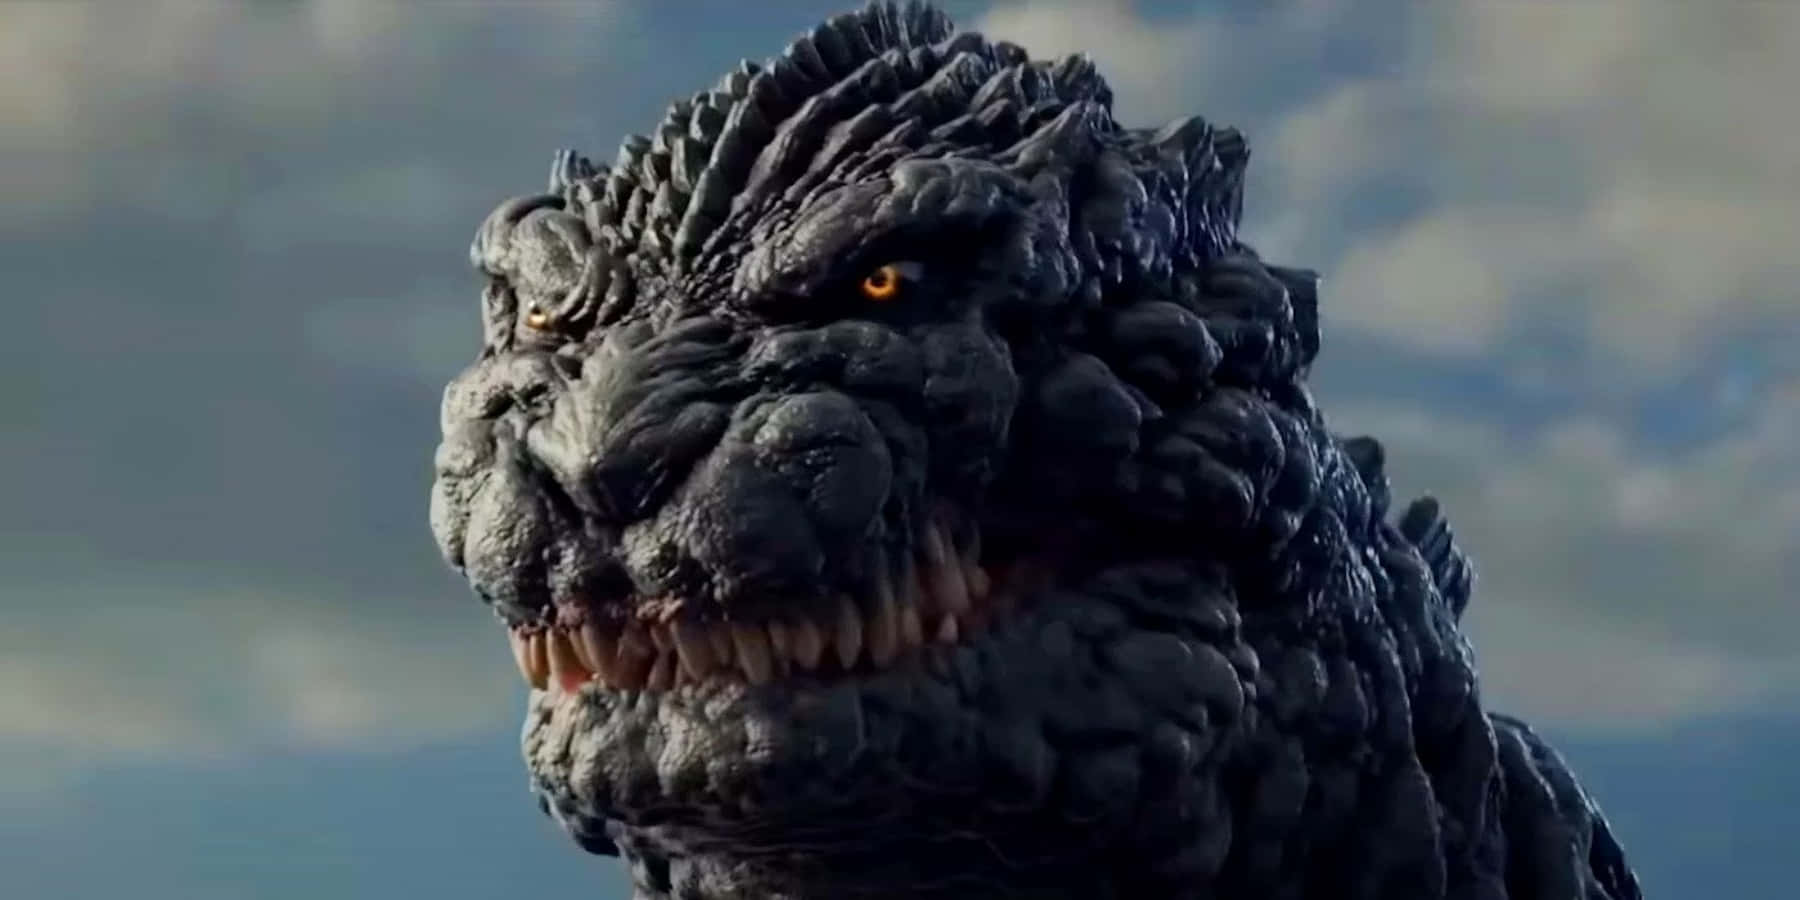 Godzillanahaufnahme Mit Himmel-hintergrundbild